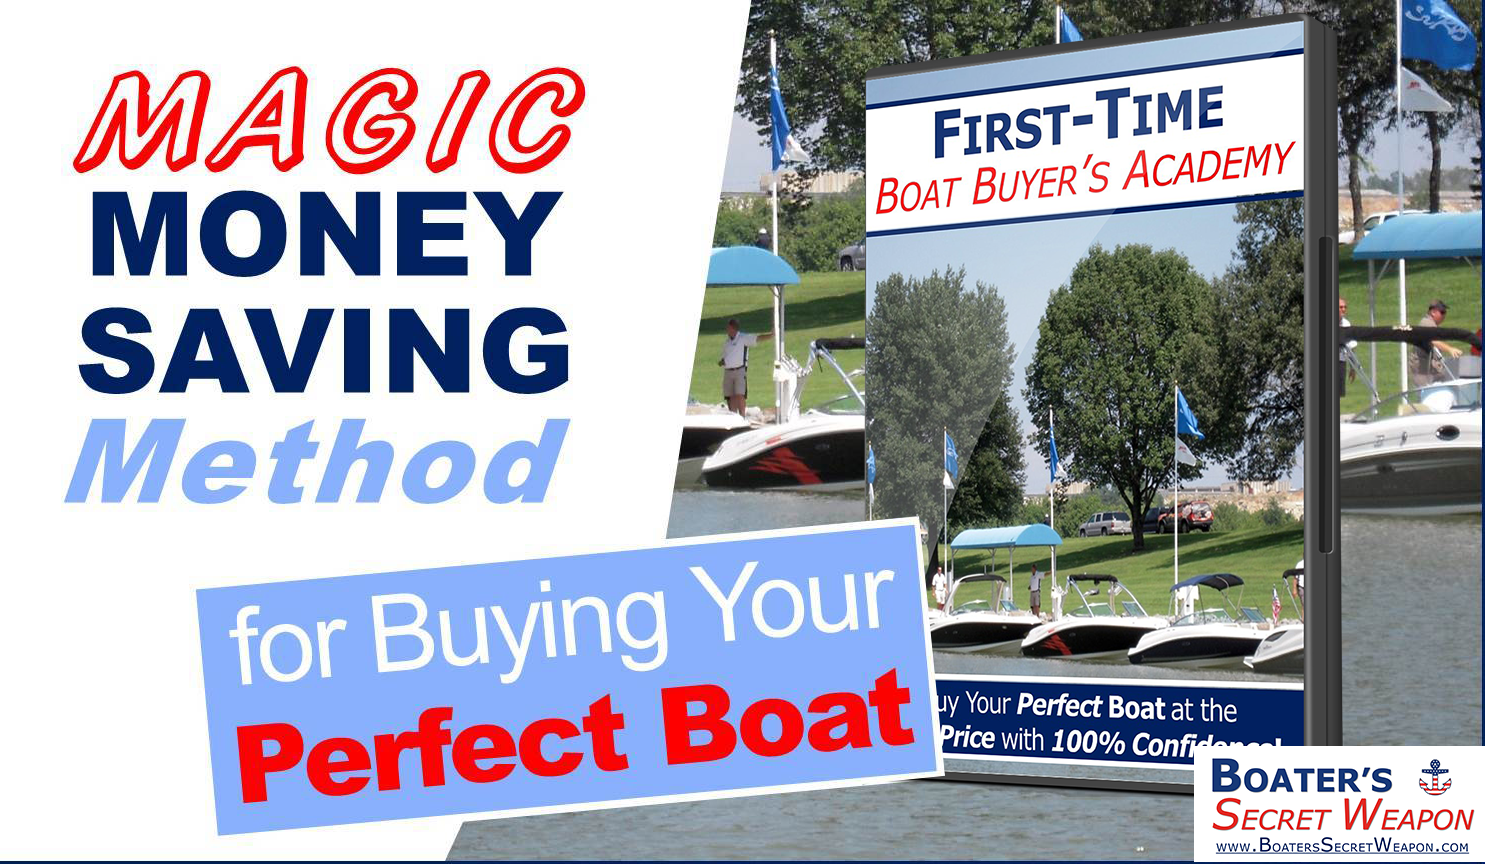 First-Time Boat Buyer's Academy & Magic Money Saving Method